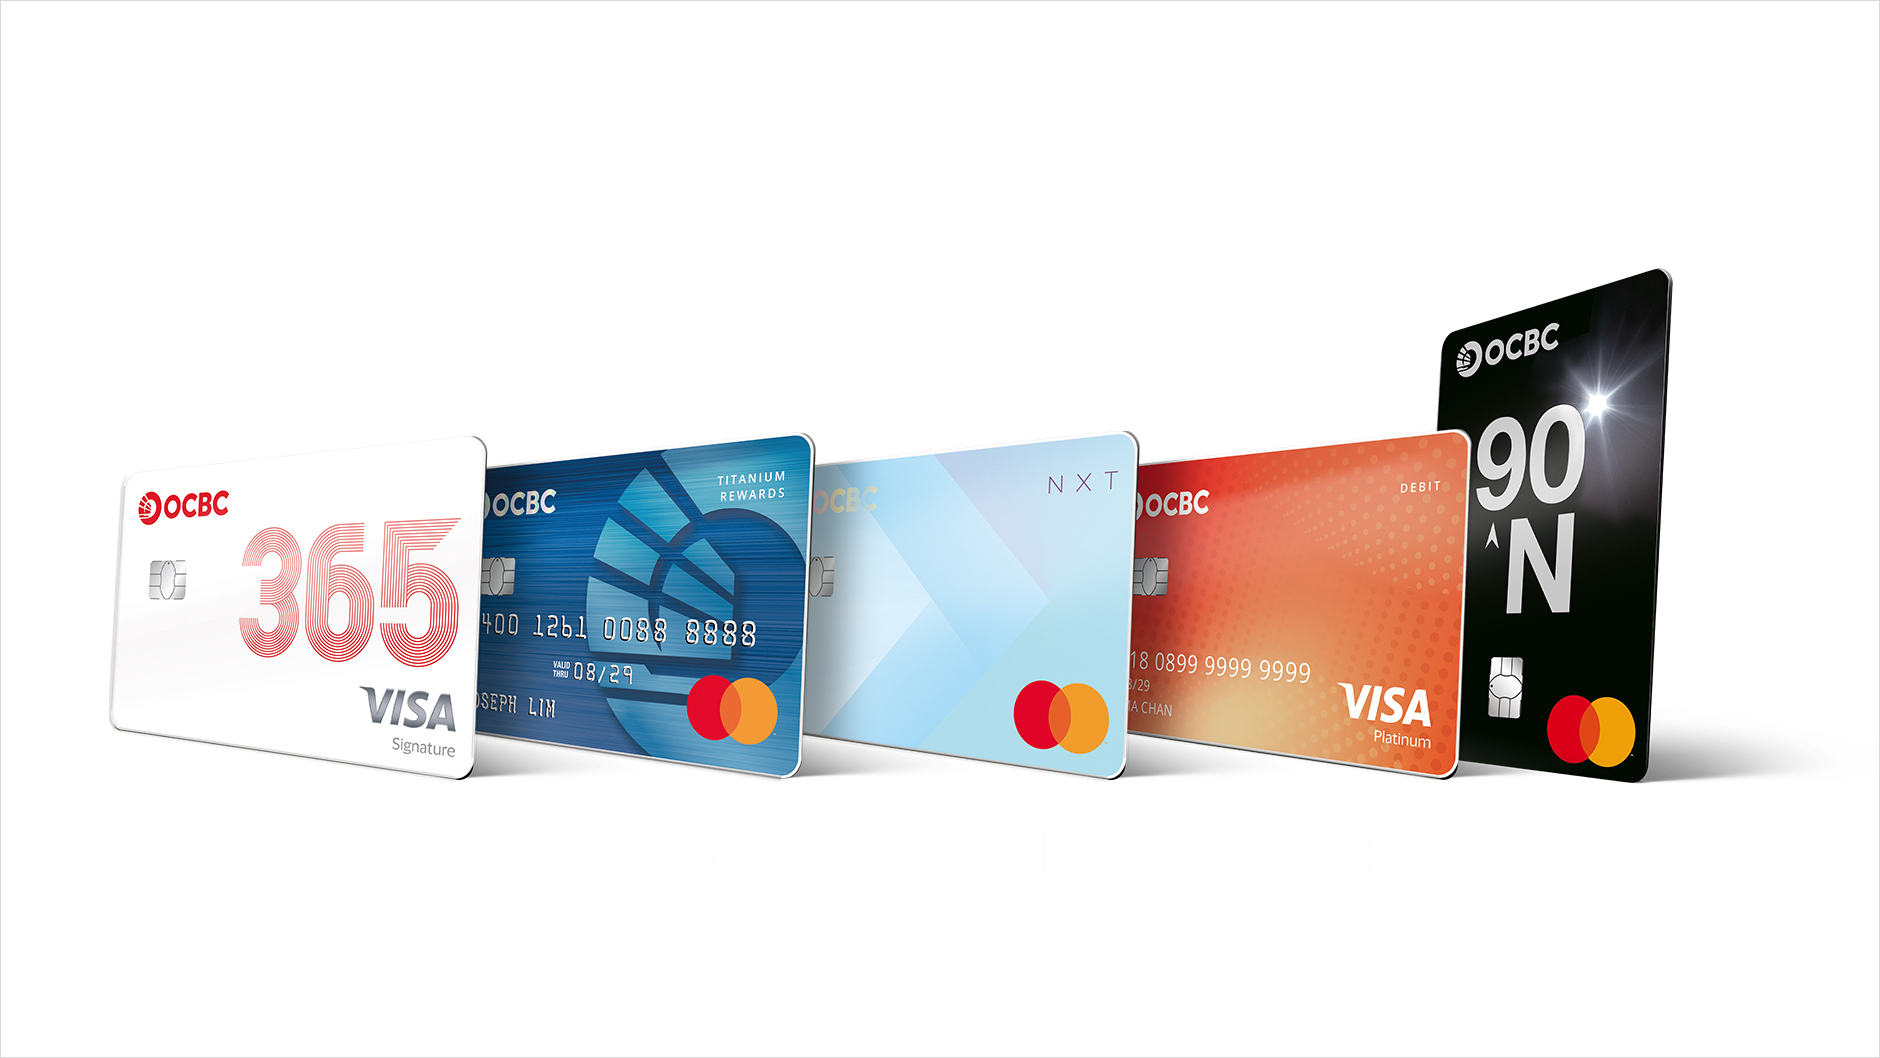 Credit Card sign-up promotion at OCBC Wisma Atria